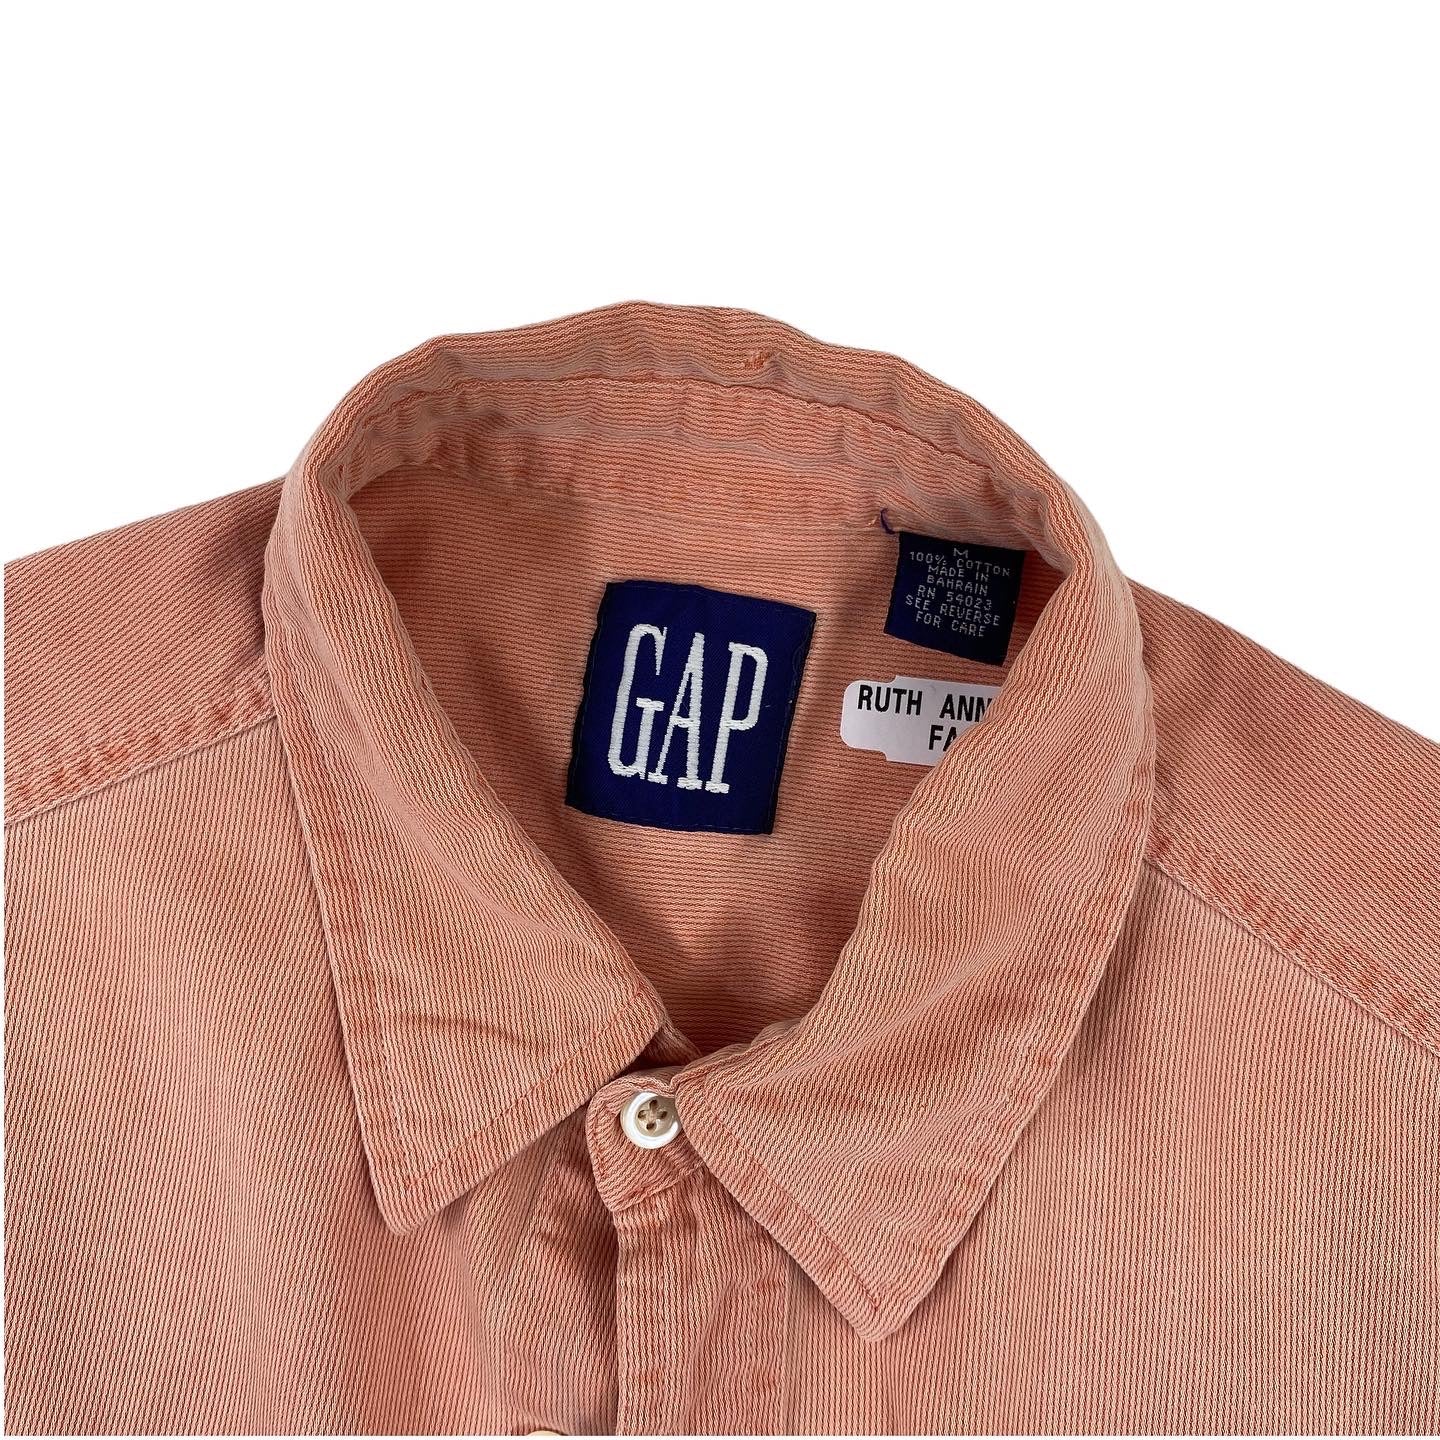 Peach Gap button up shirt. medium